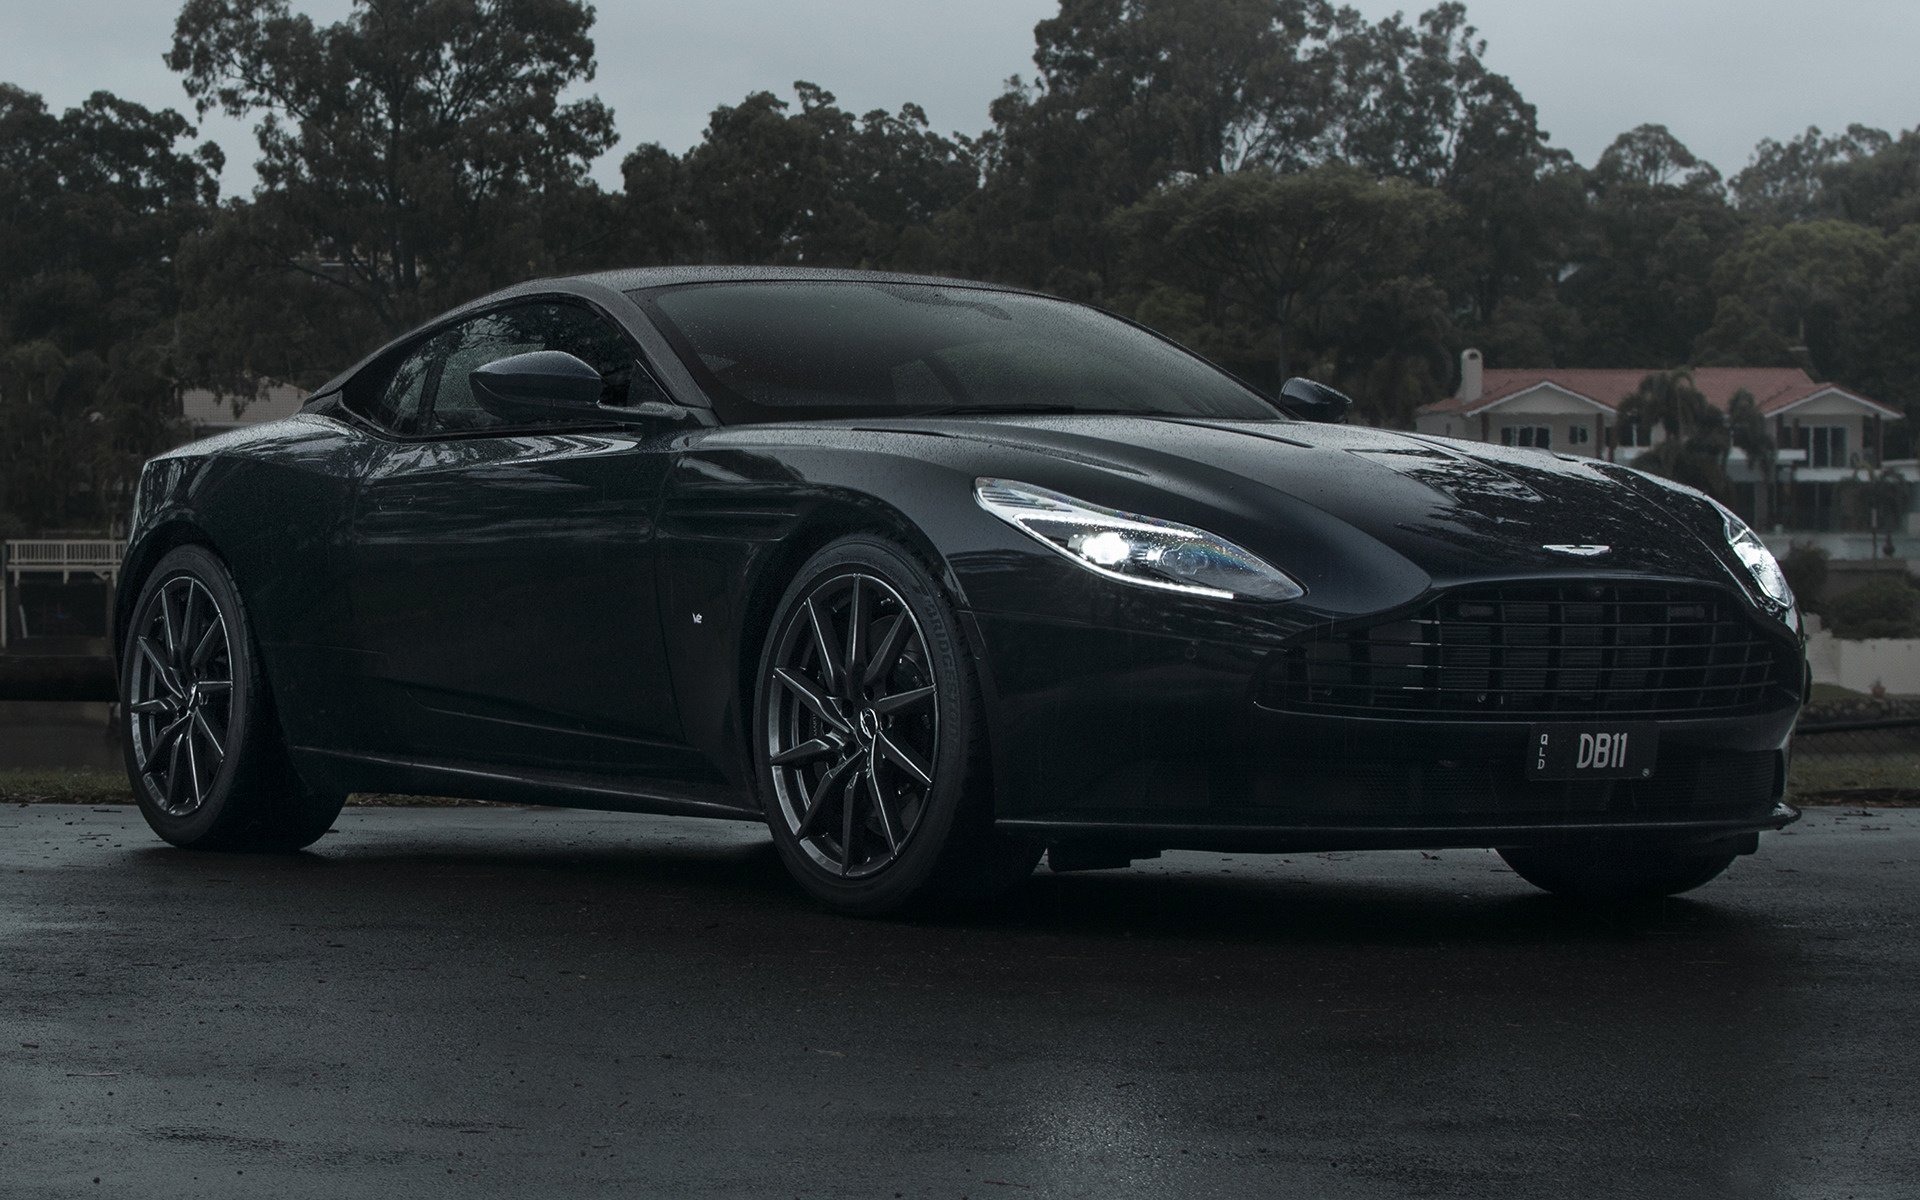 Aston Martin DB11, 2017 model, HD wallpapers, High-quality images, 1920x1200 HD Desktop